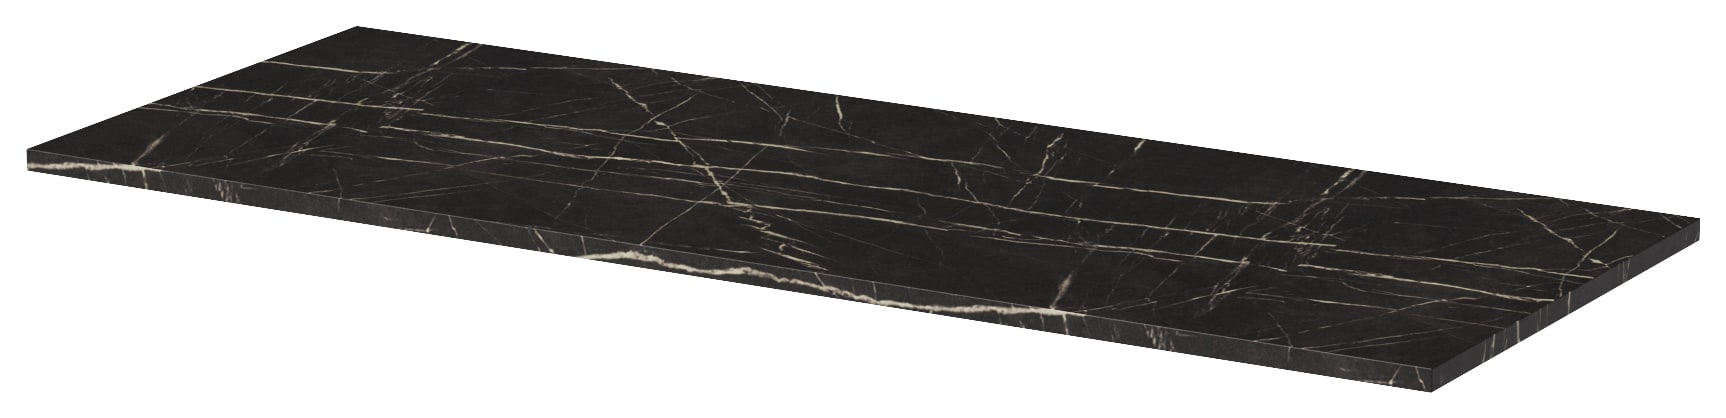 Wickes Tallinn Black Marble Worktop - 465 x